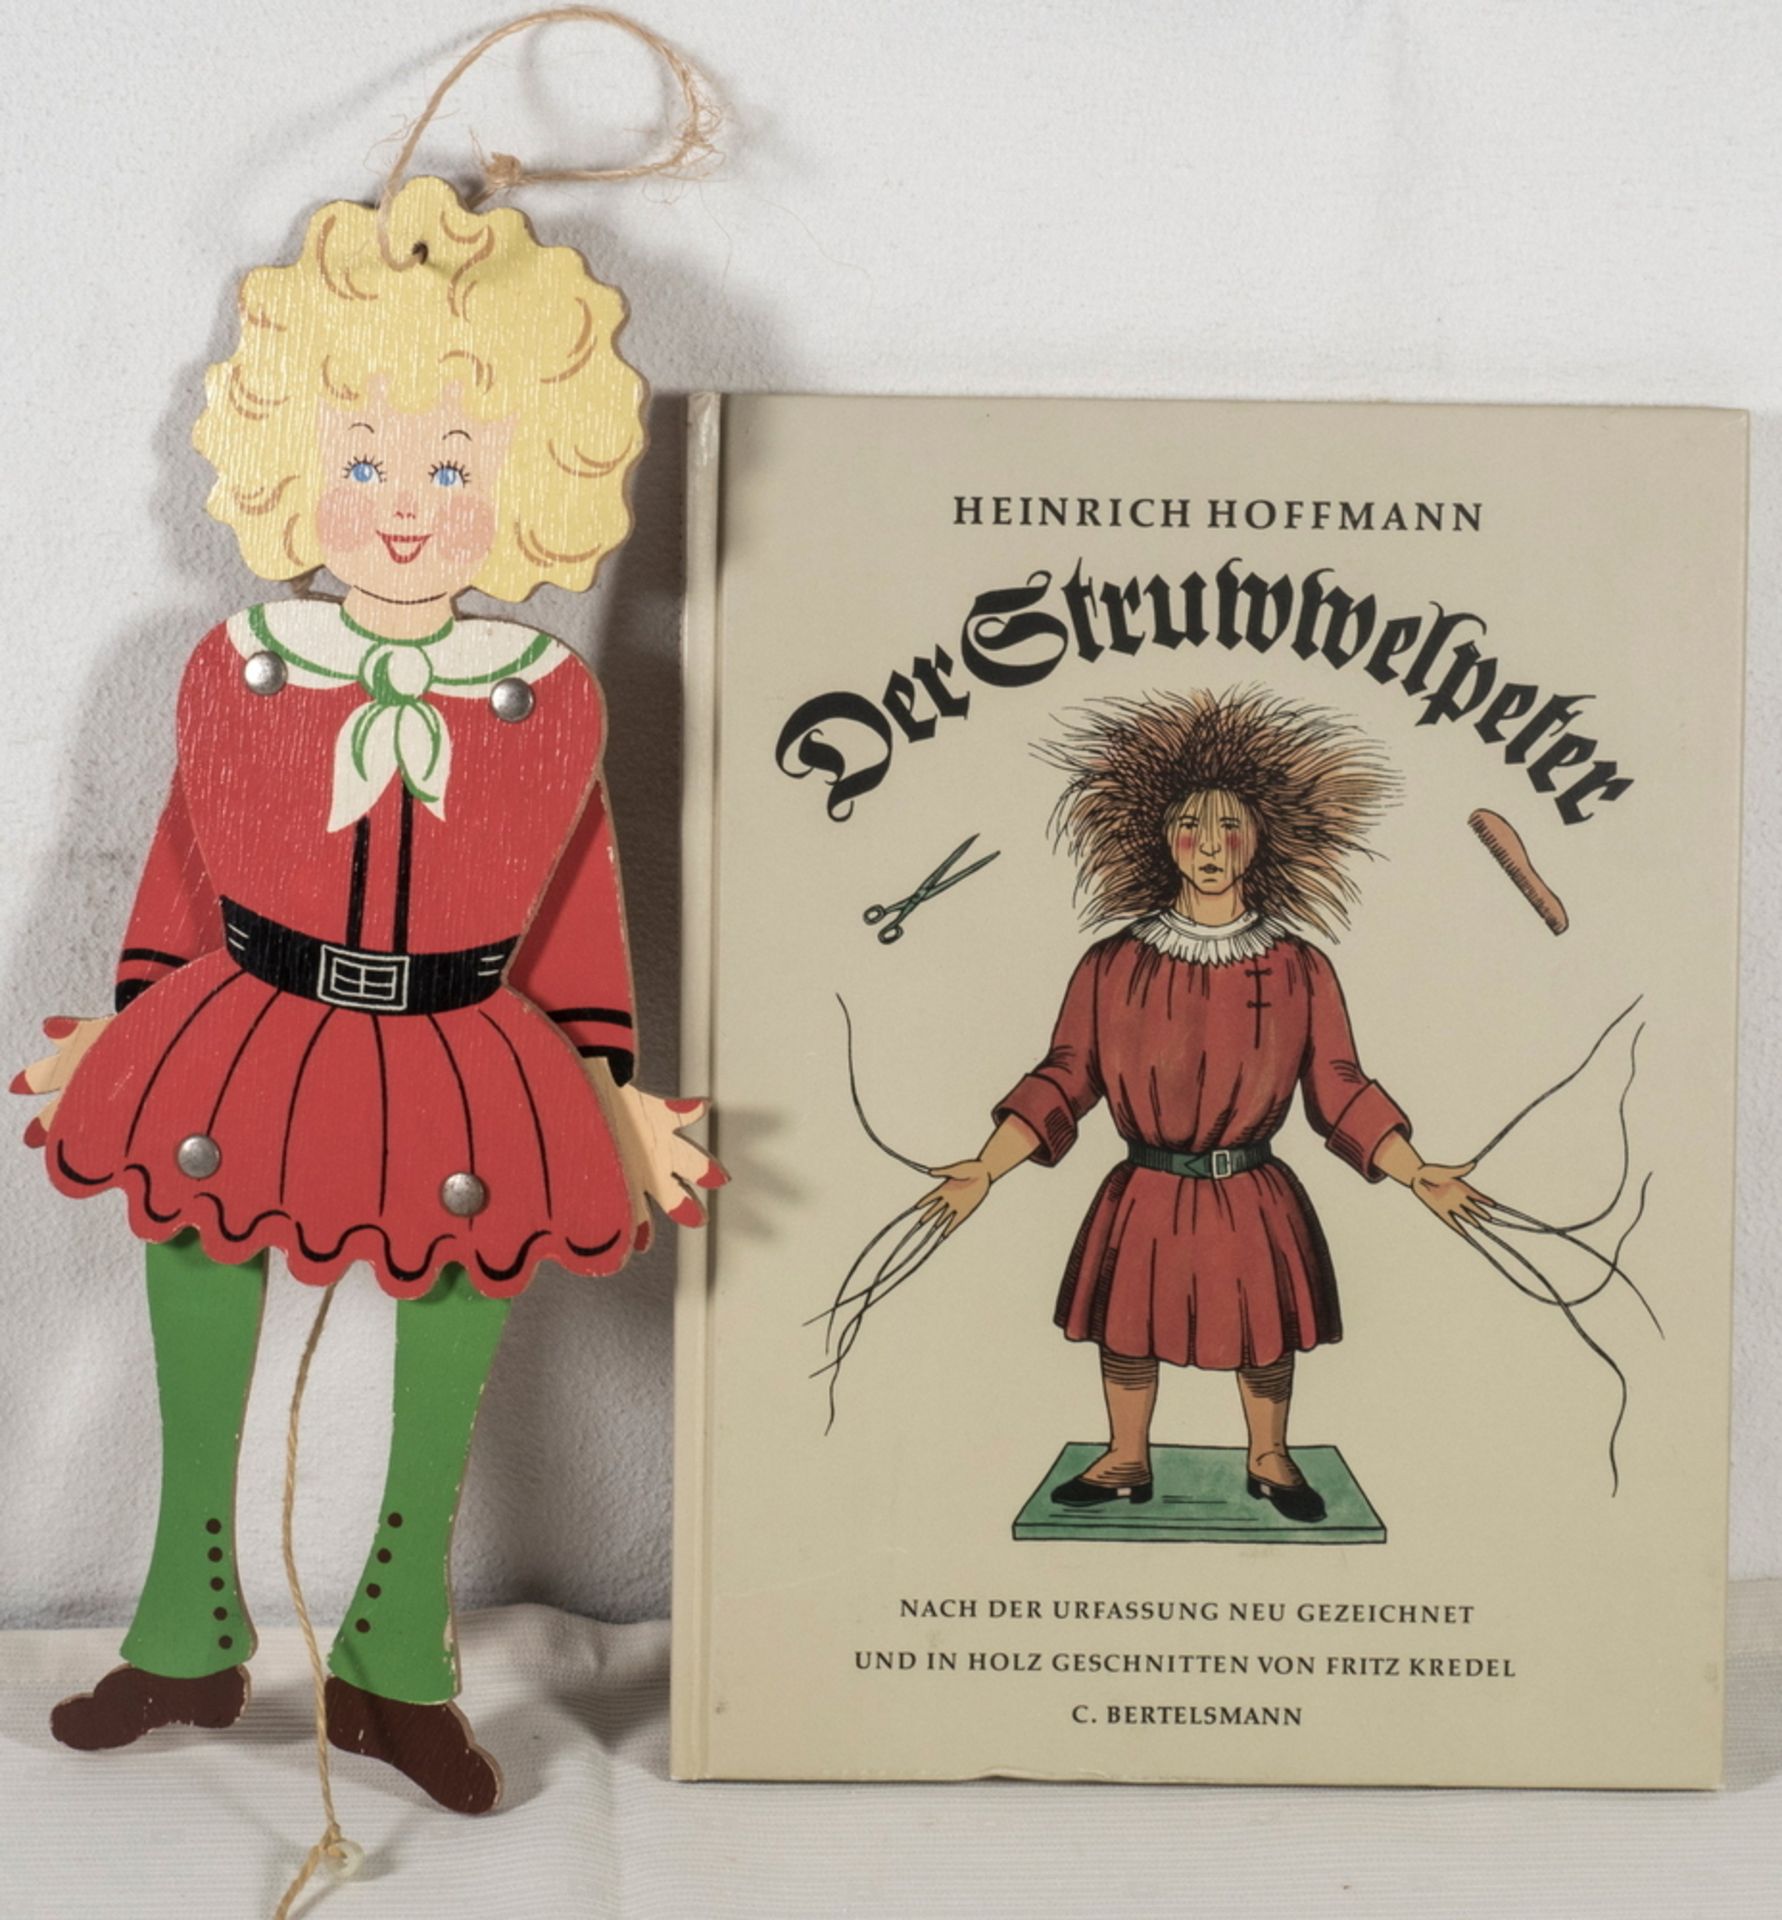 Struwwelpeter - Buch, dazu Struwwelpeter als Hampelmann. Holz. Höhe: ca. 29 cm.